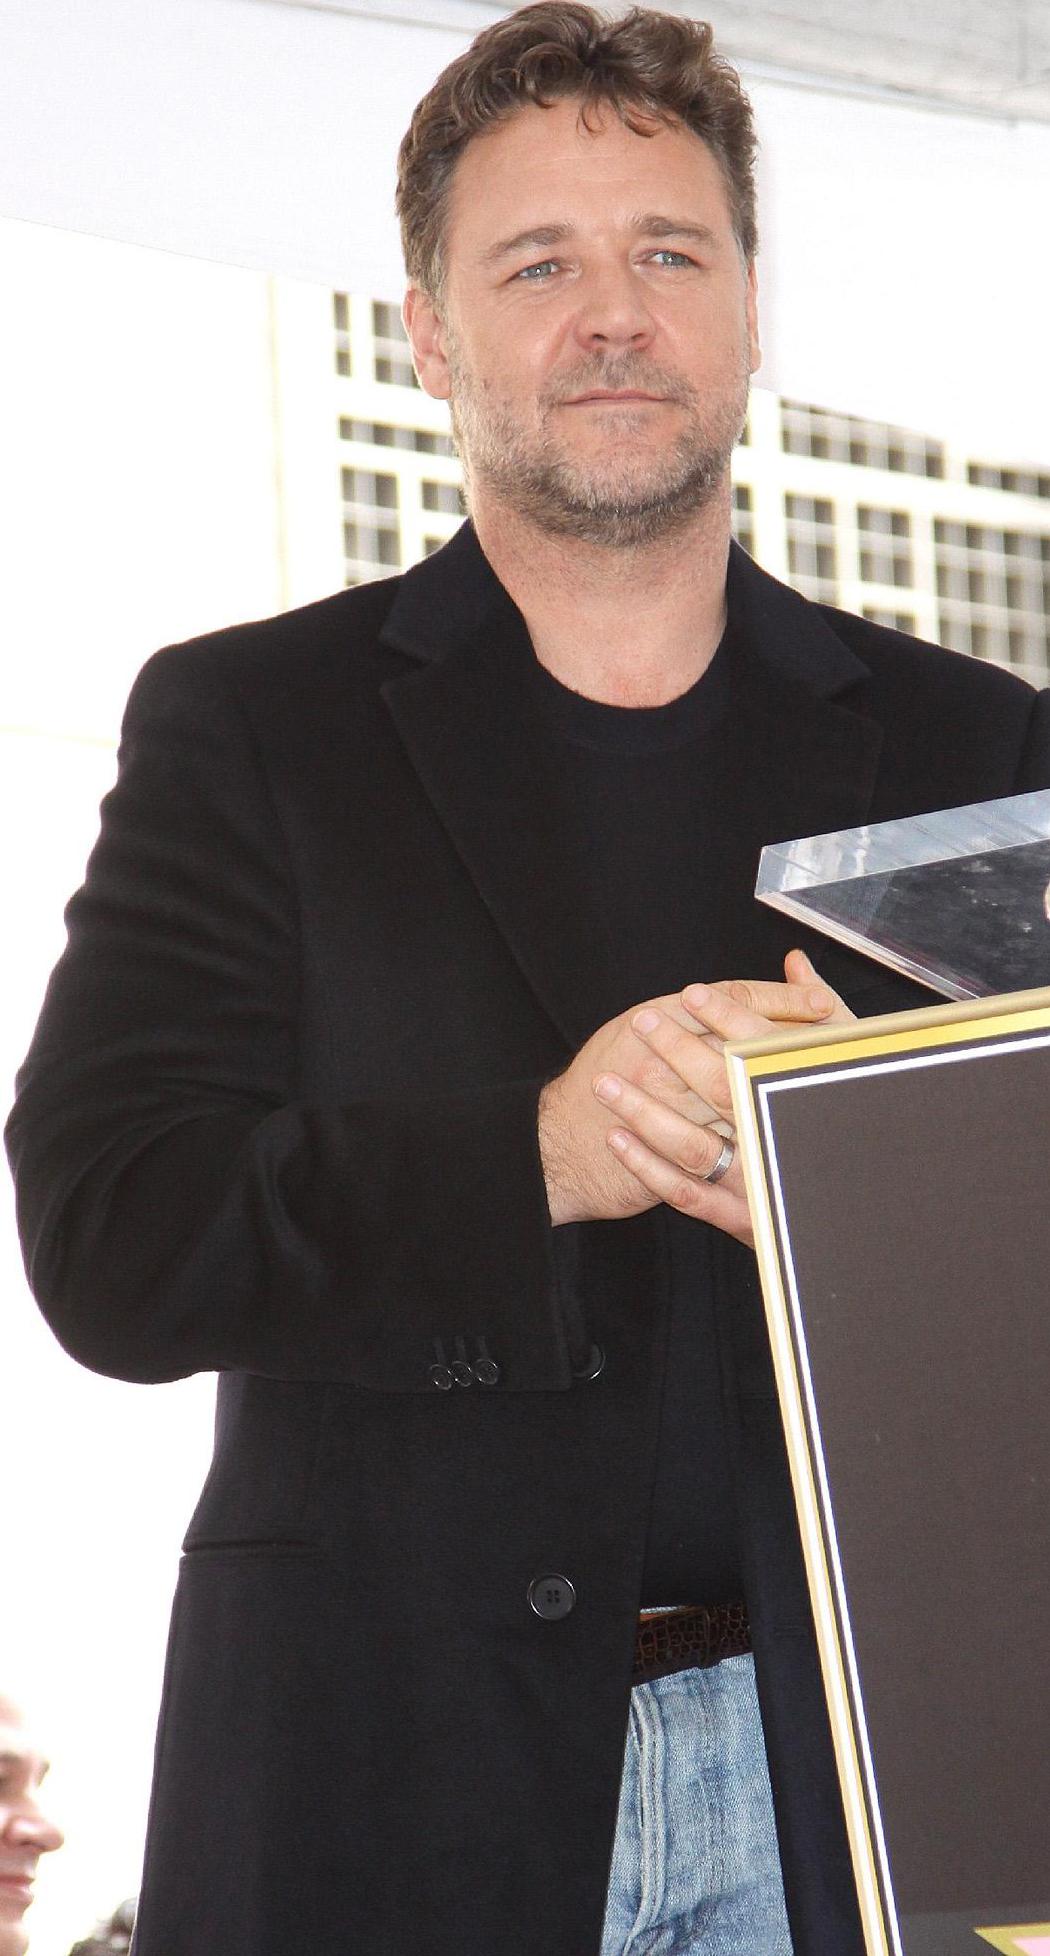 Russell Crowe 